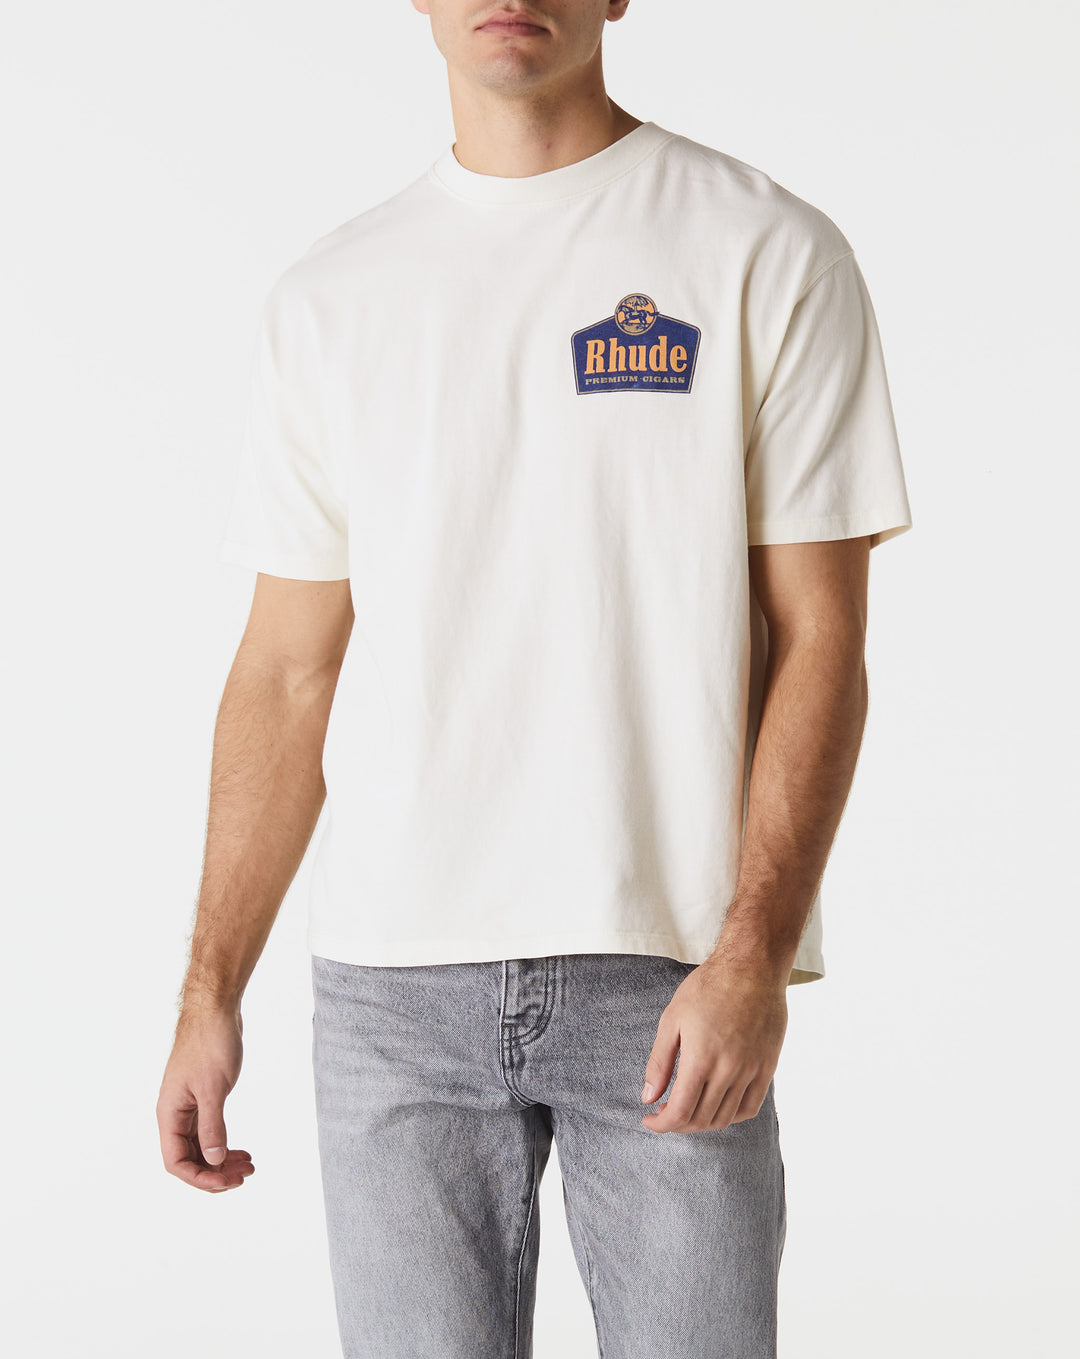 Rhude Rhude Grand Cru T-Shirt  - XHIBITION